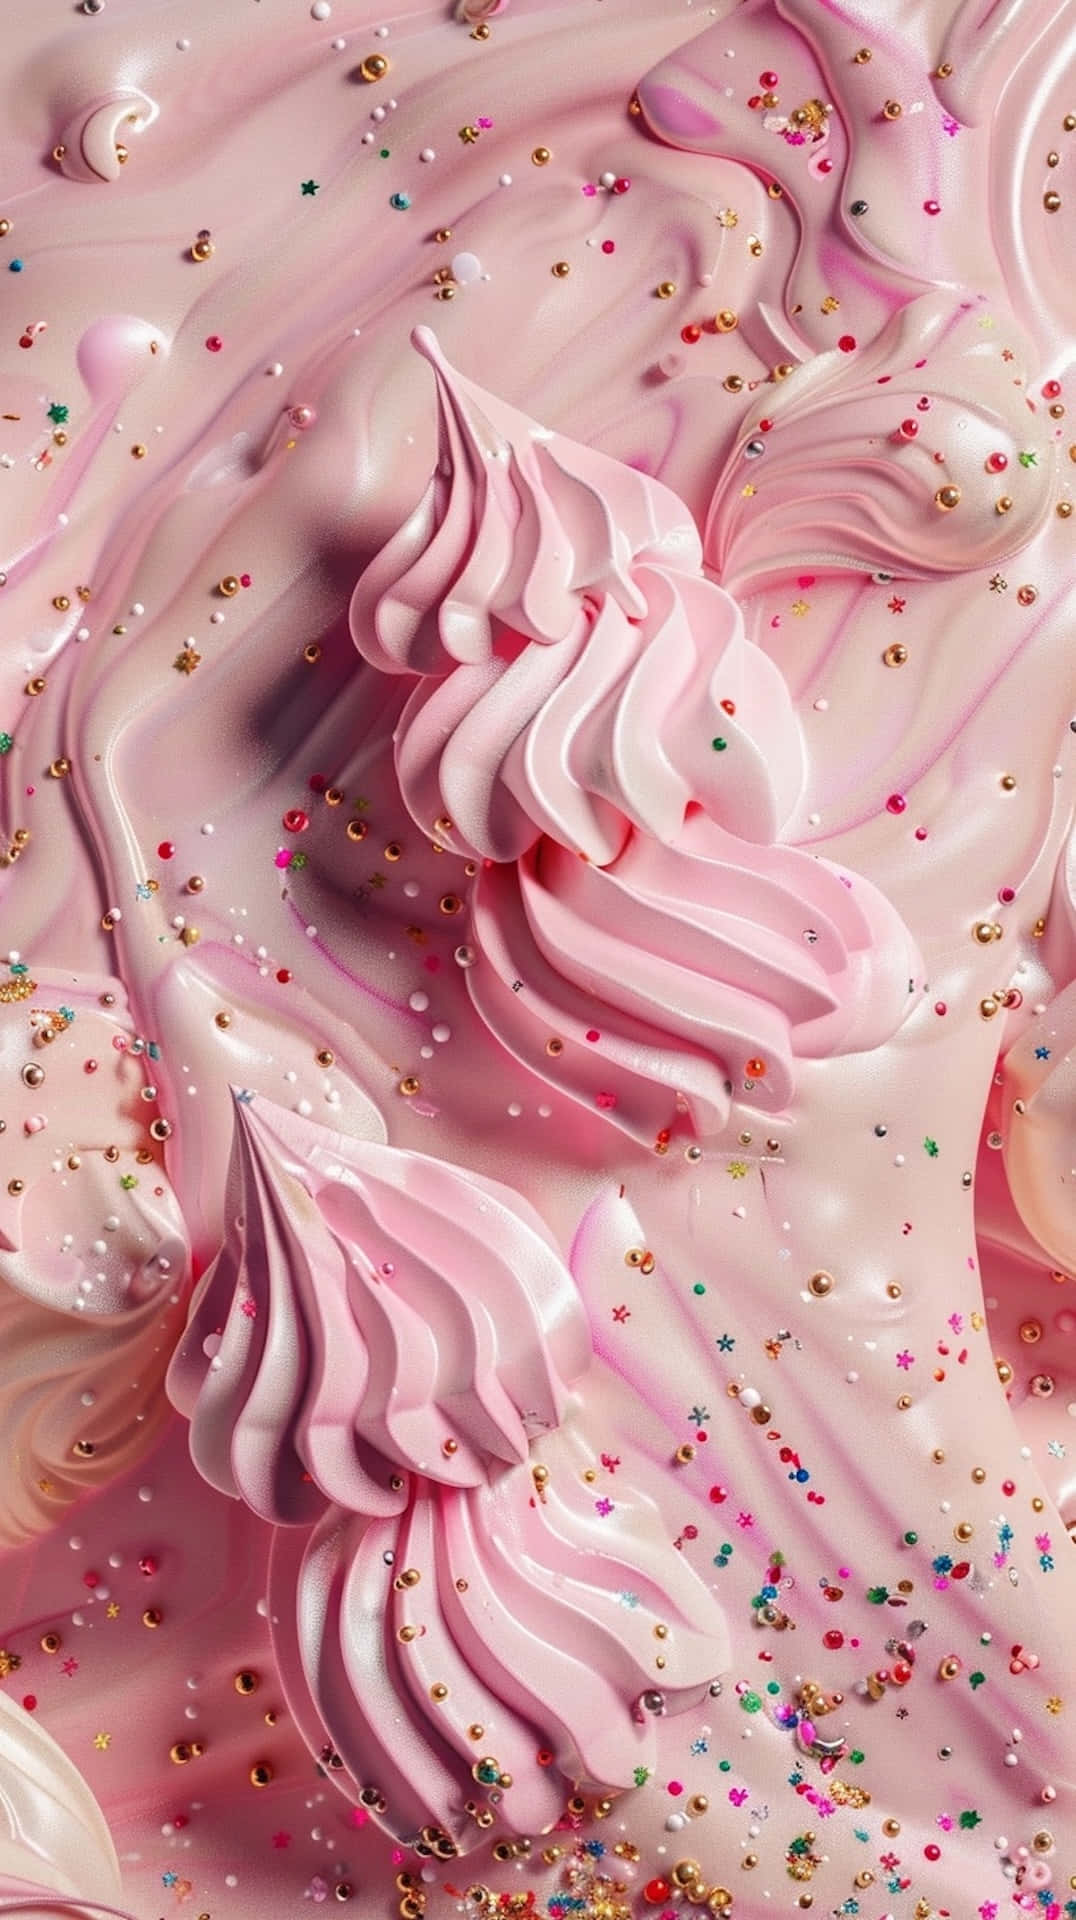 Pink Swirlsand Sprinkles Texture Wallpaper